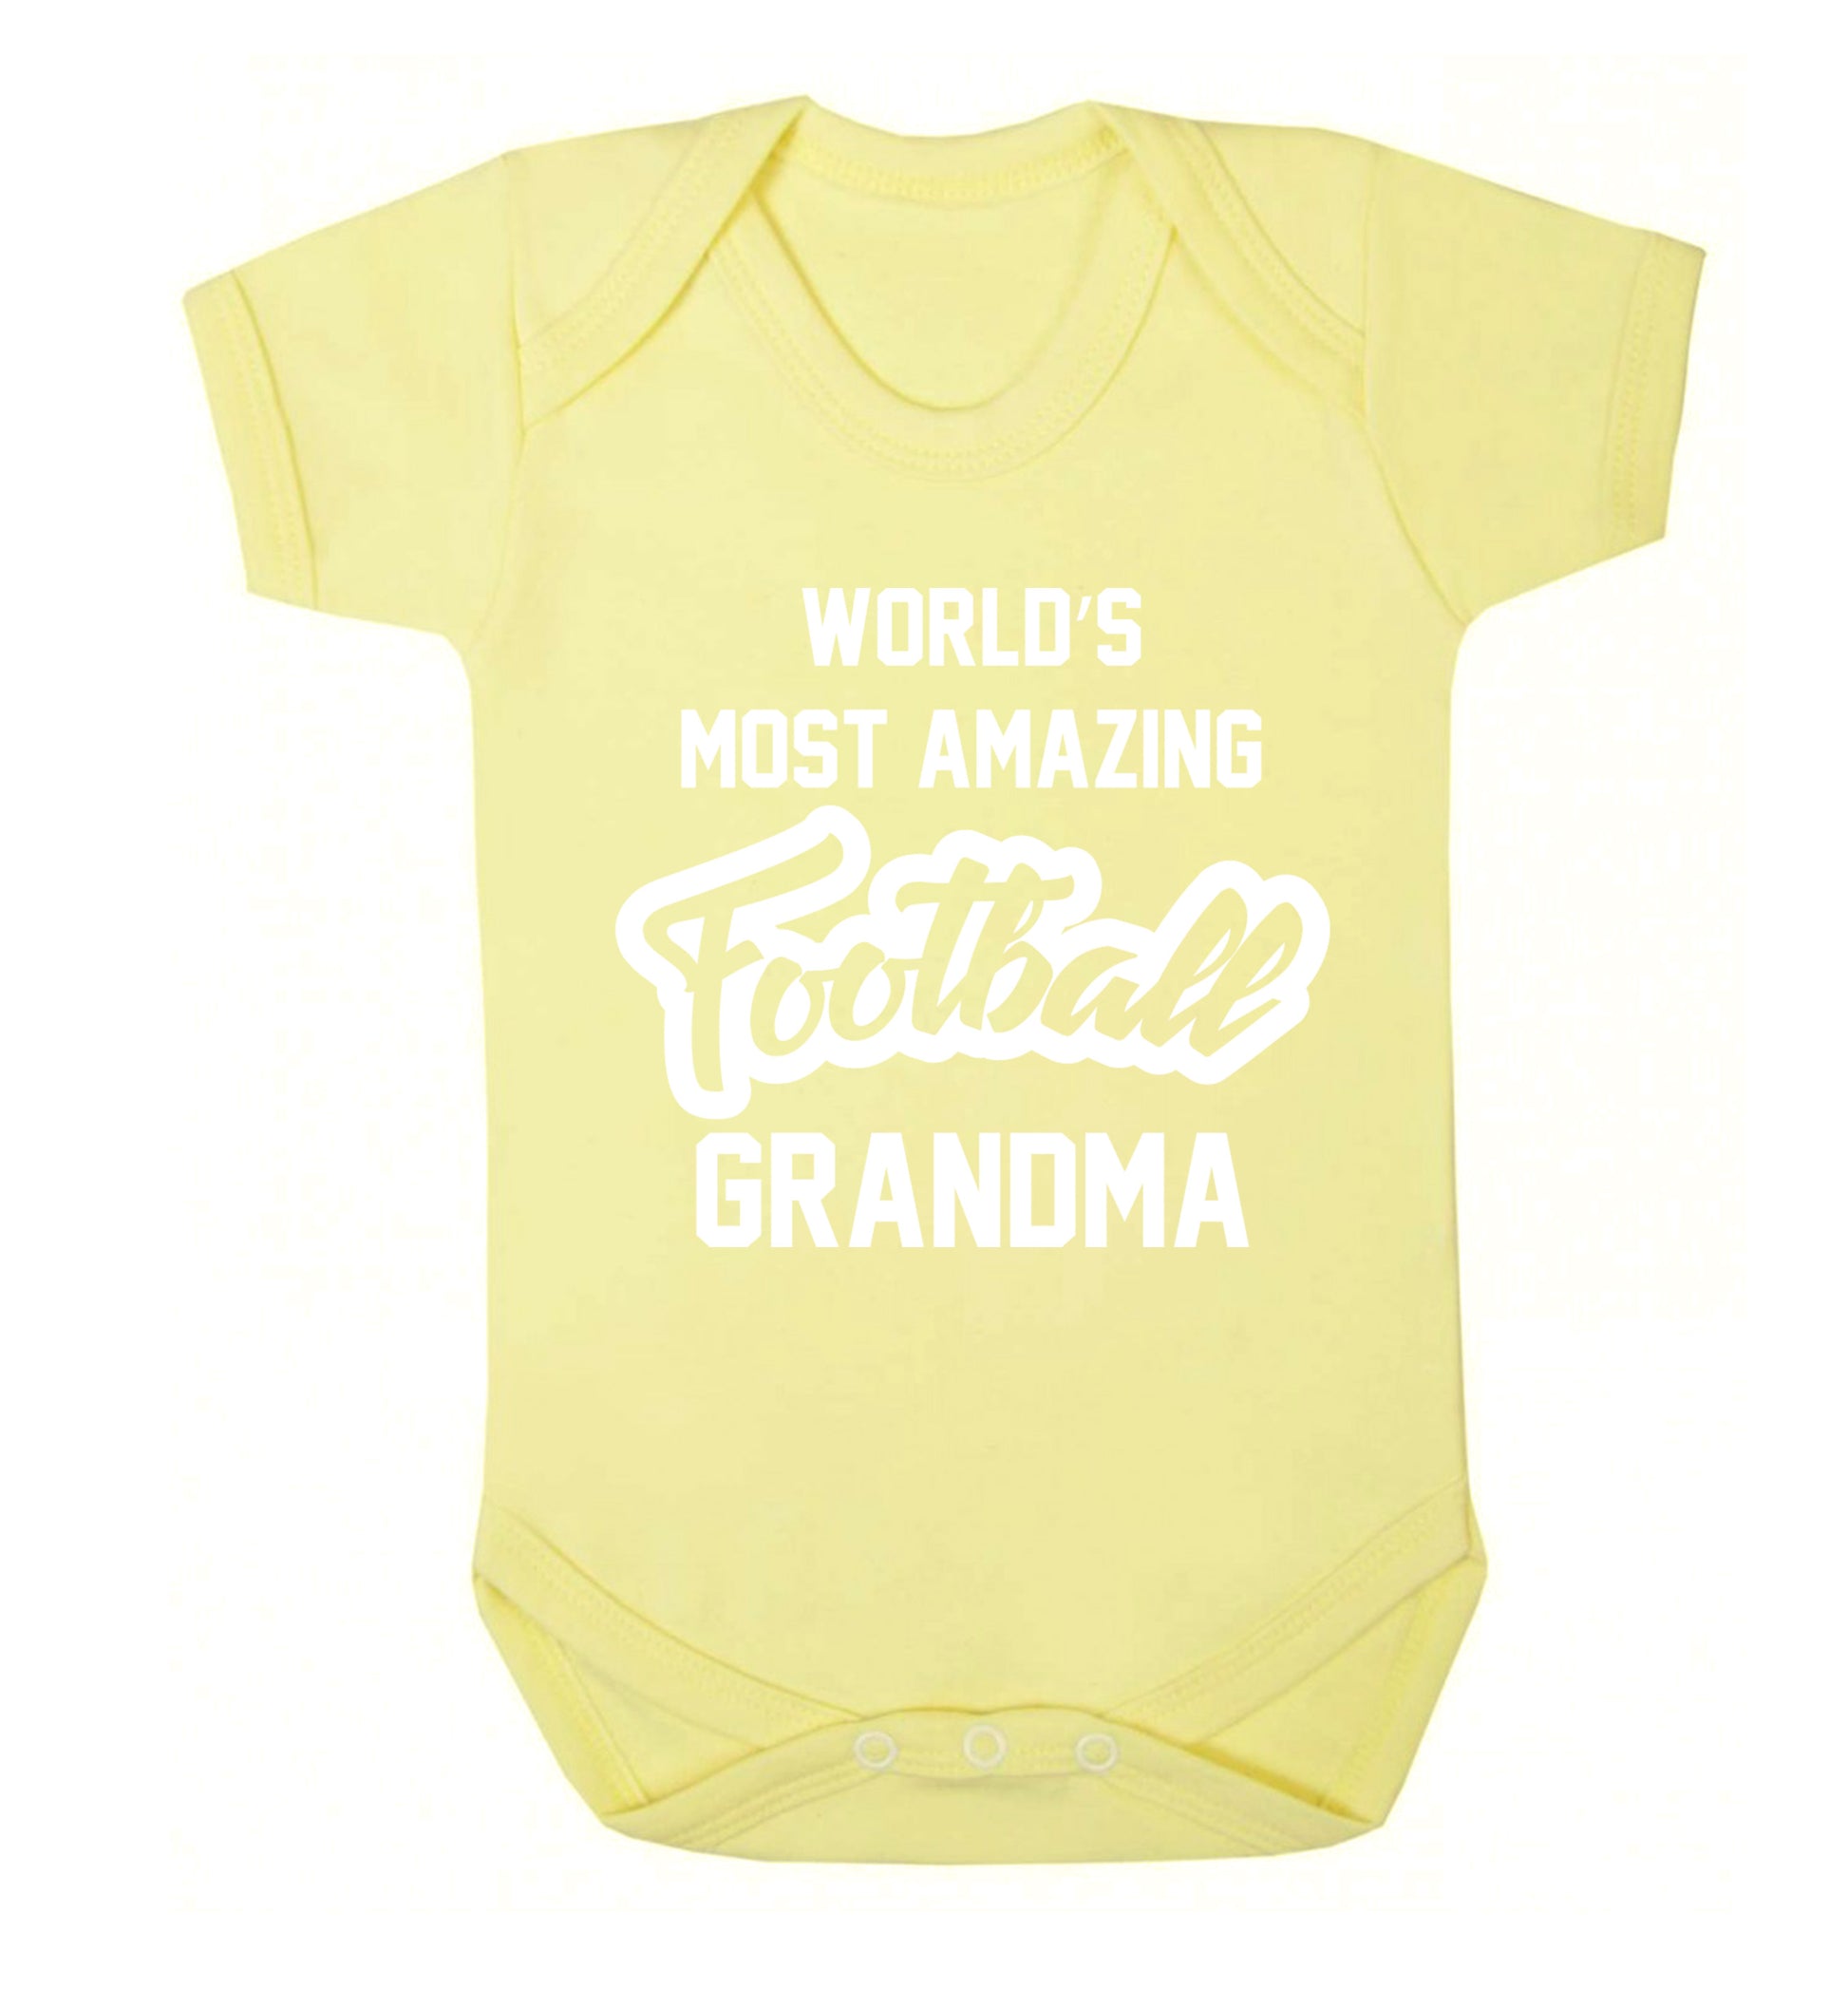 Worlds most amazing football grandma Baby Vest pale yellow 18-24 months